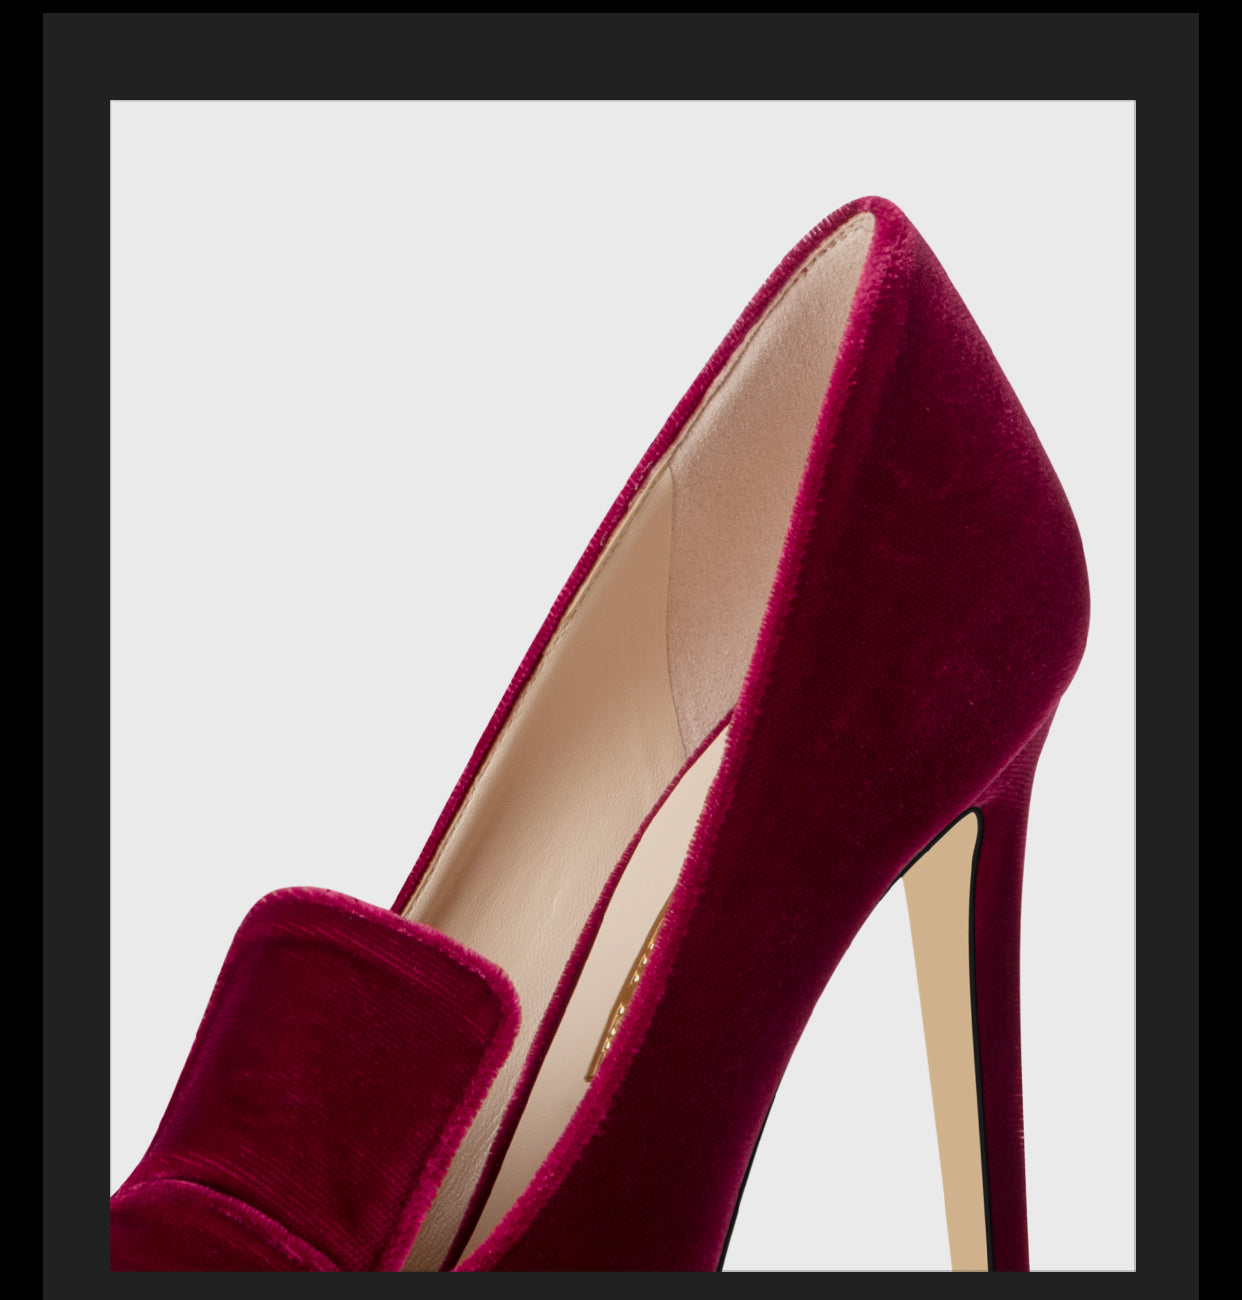 Fabfei suede 10cm stiletto burgundy pointed toe sexy pumps - Kara